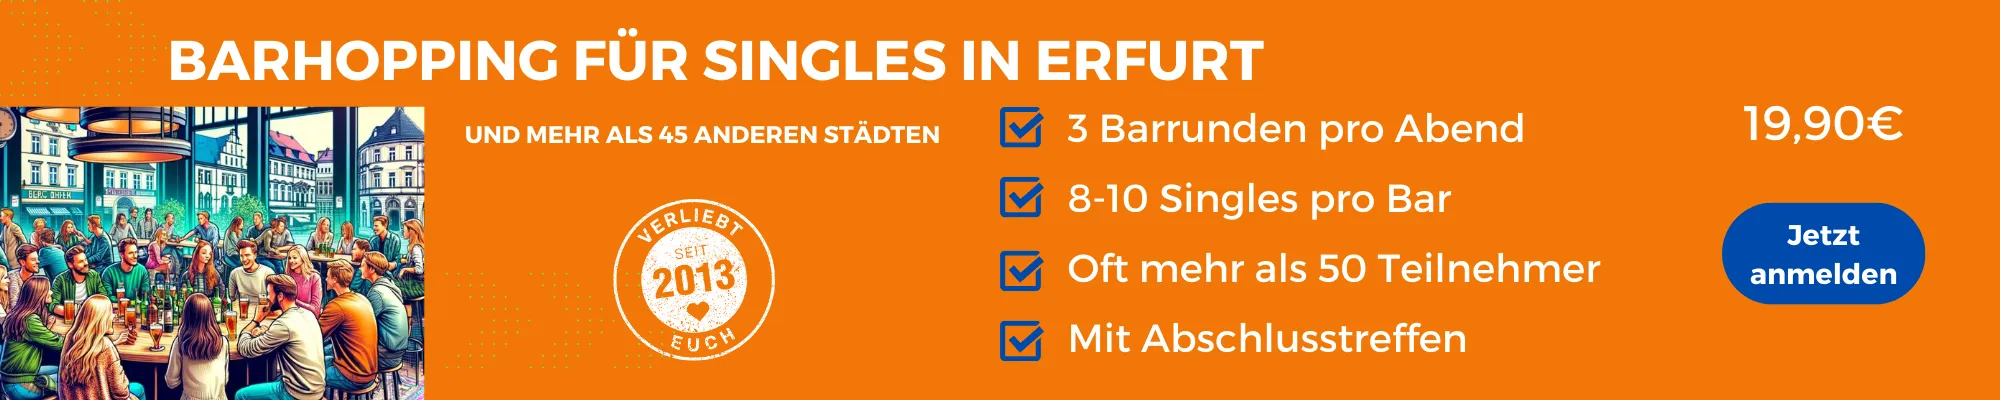 Face-to-Face-Dating-Erfurt: Barhopping für Singles in Erfurt